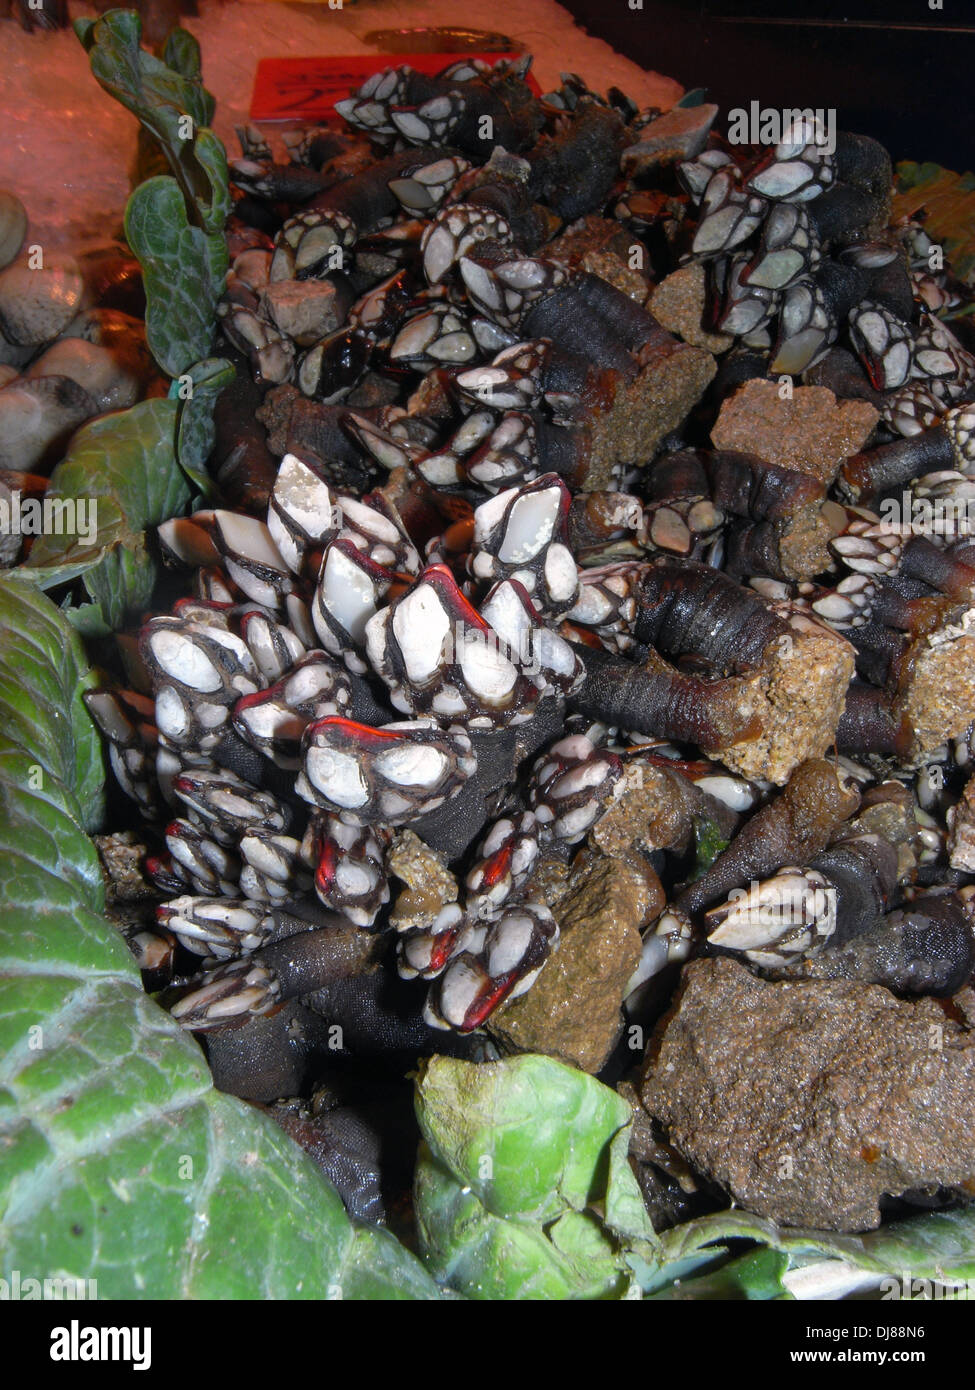 Goose barnacles or percebes, a delicacy from Galicia, La Boqueria market, Barcelona, Spain Stock Photo